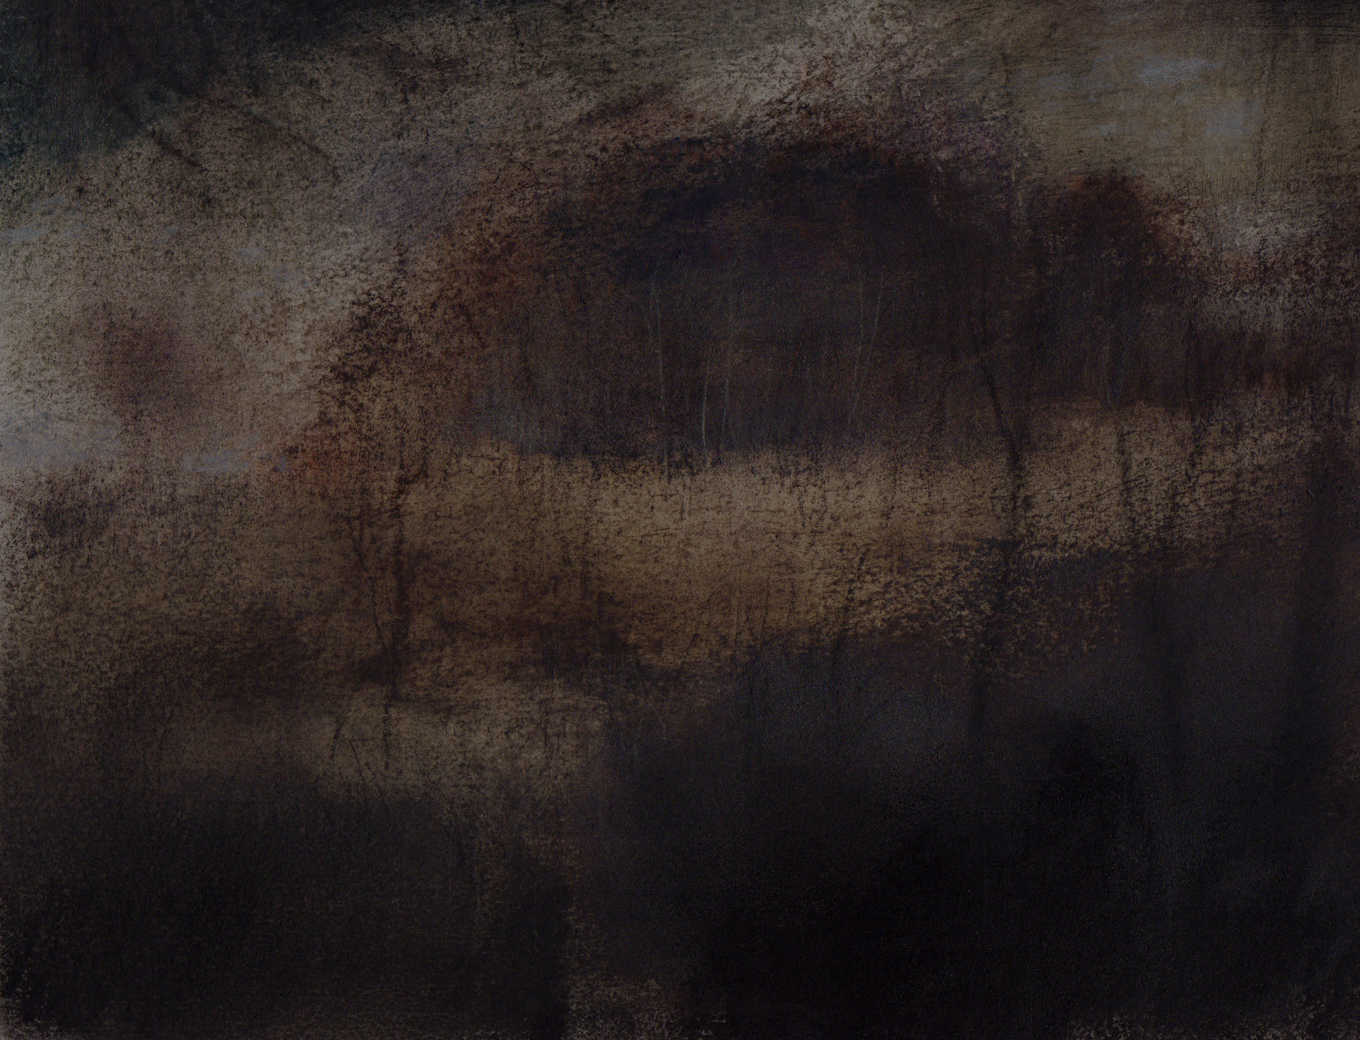 L1252 - Nicholas Herbert, British Artist, mixed media landscape painting of Chobham Common, mixed media on paper, 2020